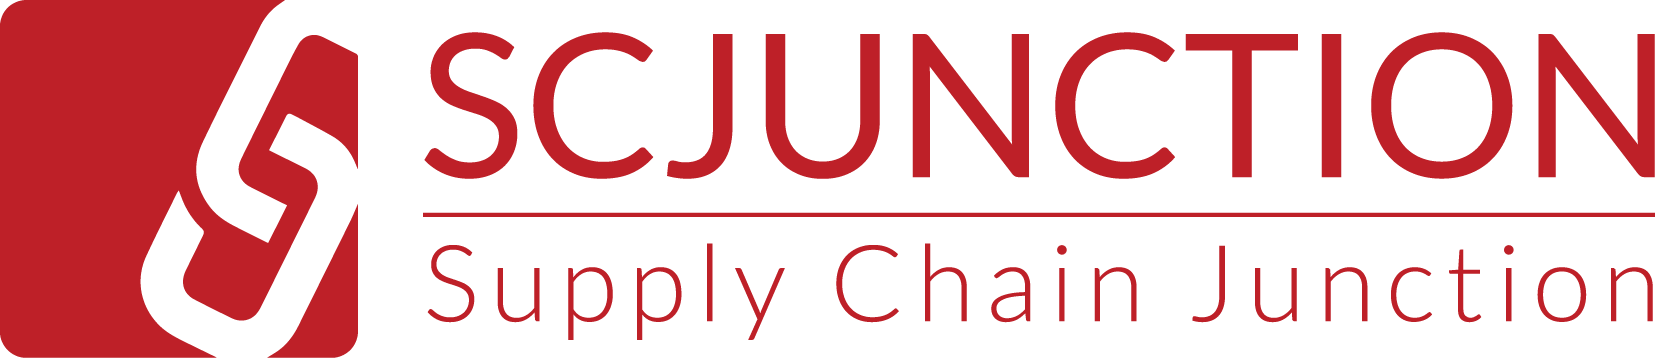 supply_chain_junction_logo-1